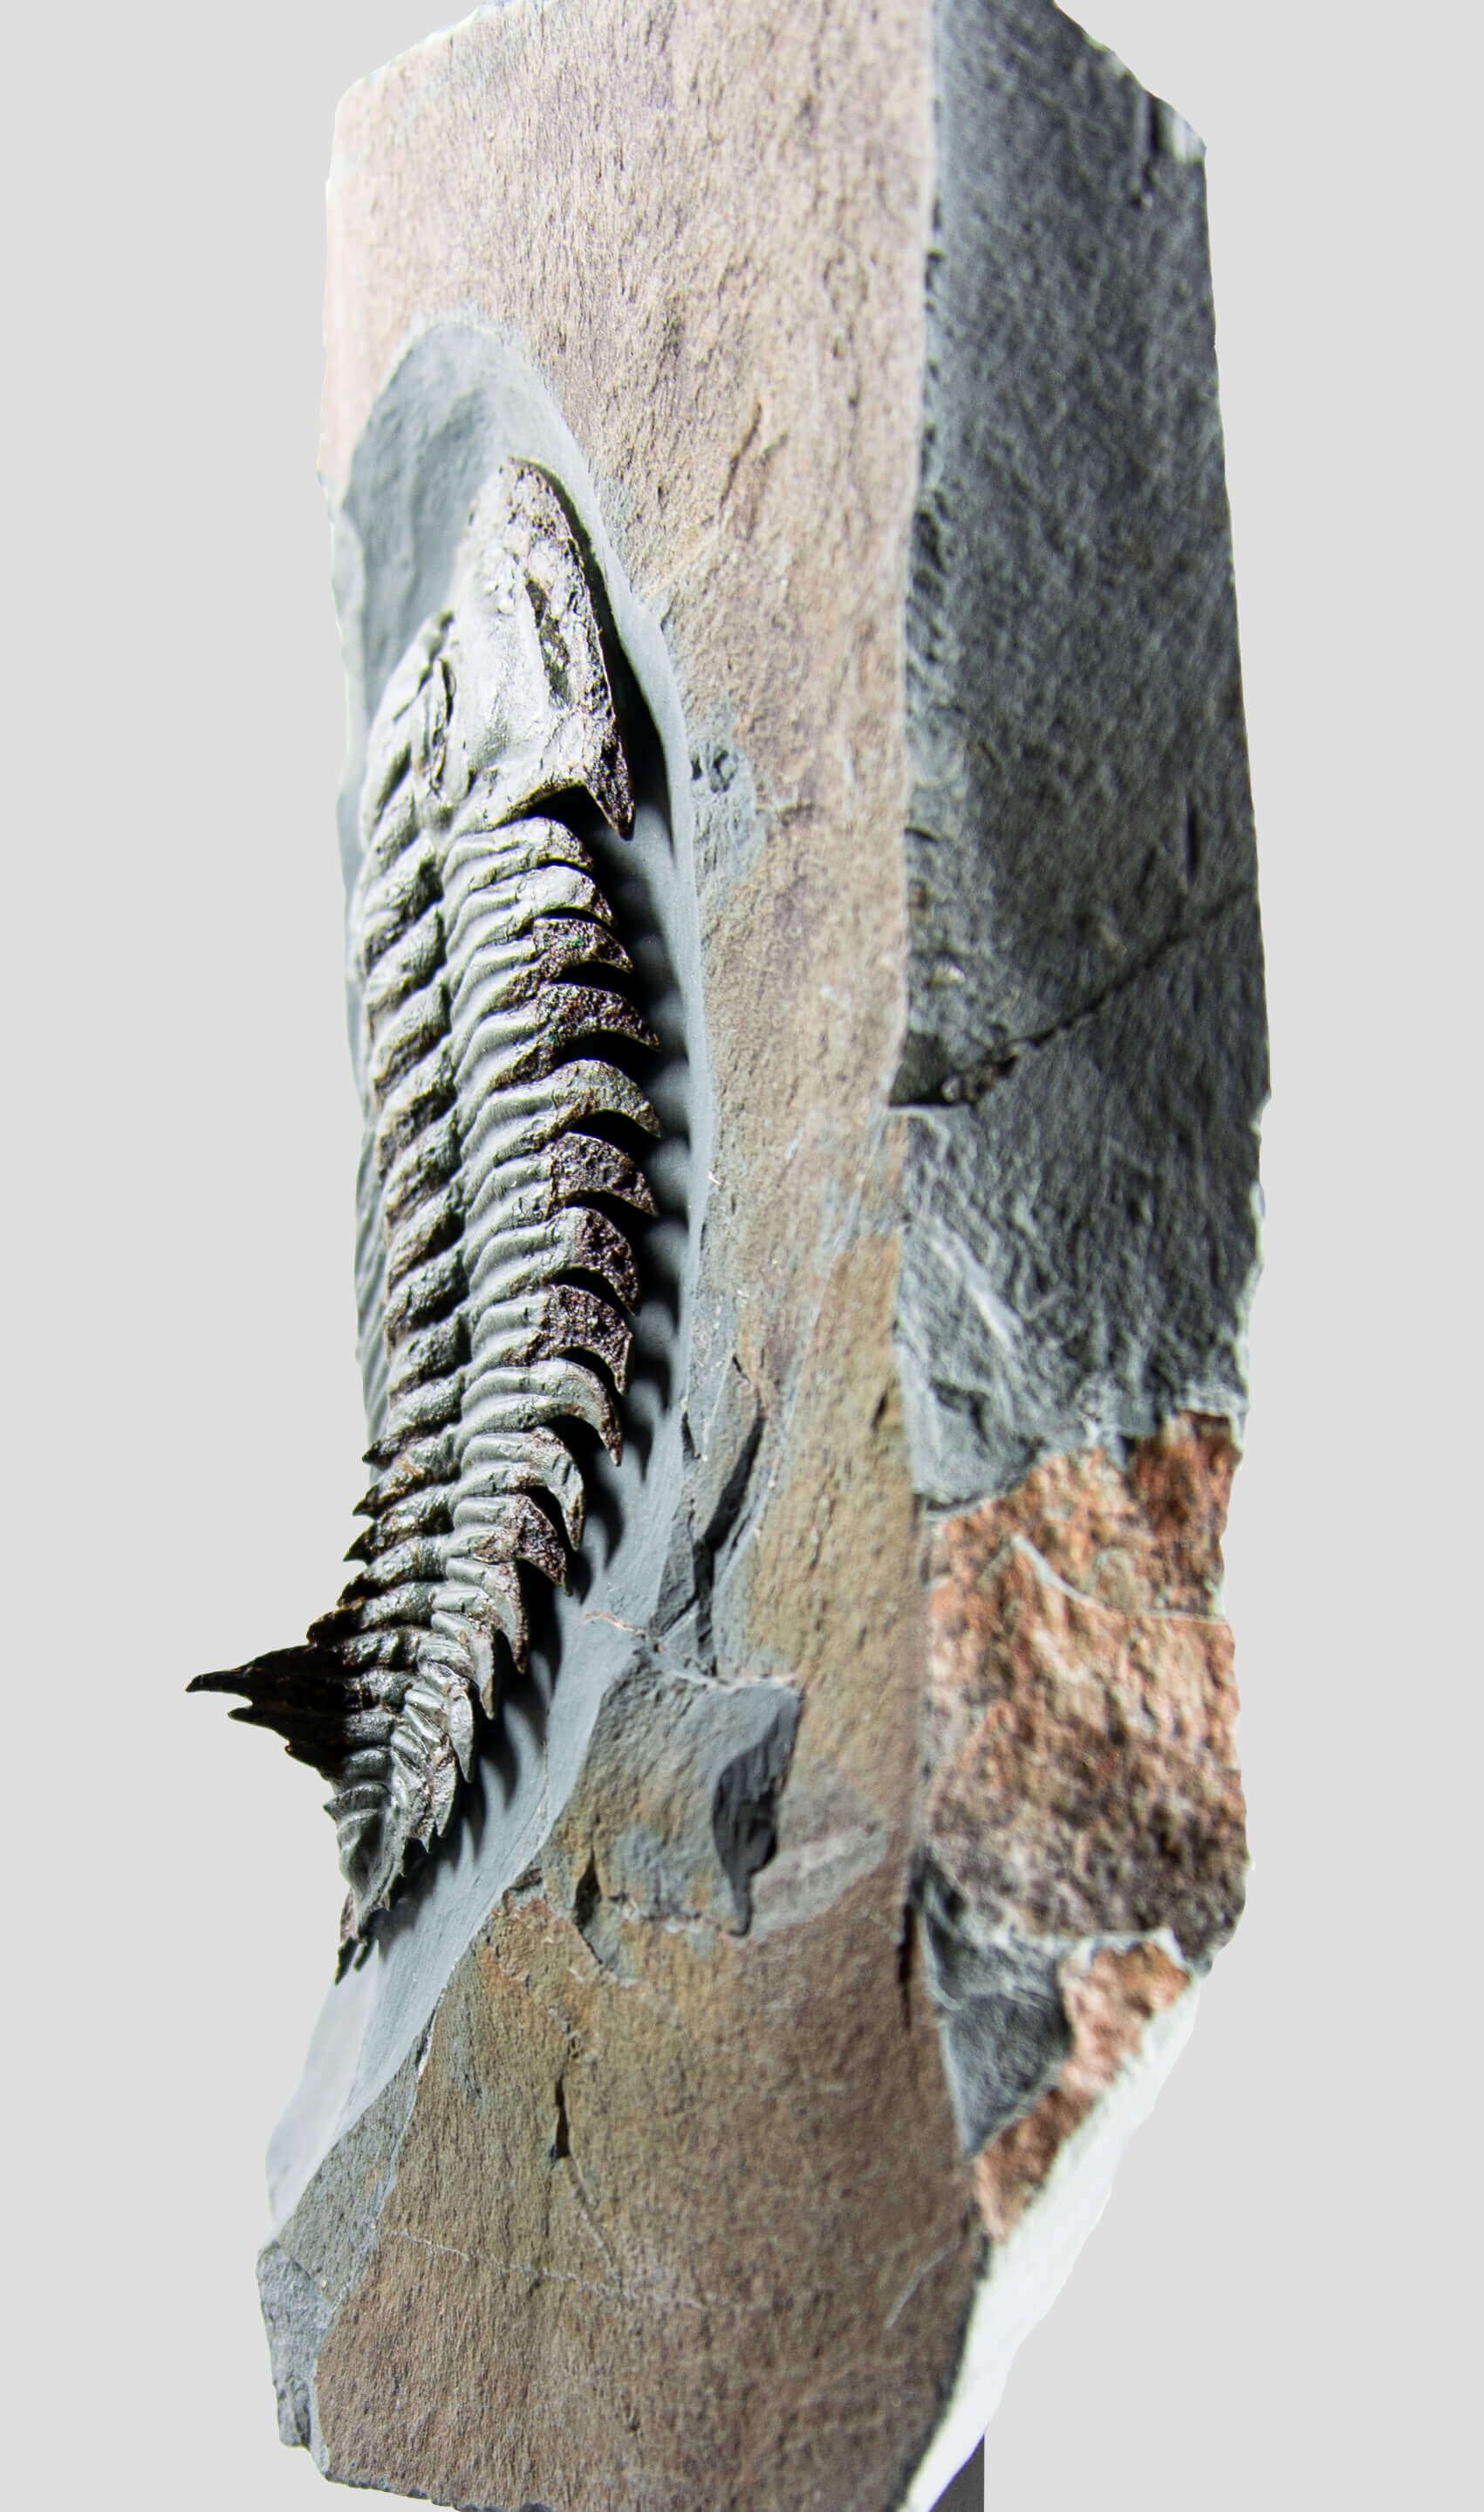 Longianda Termieri 三叶虫化石 273 毫米